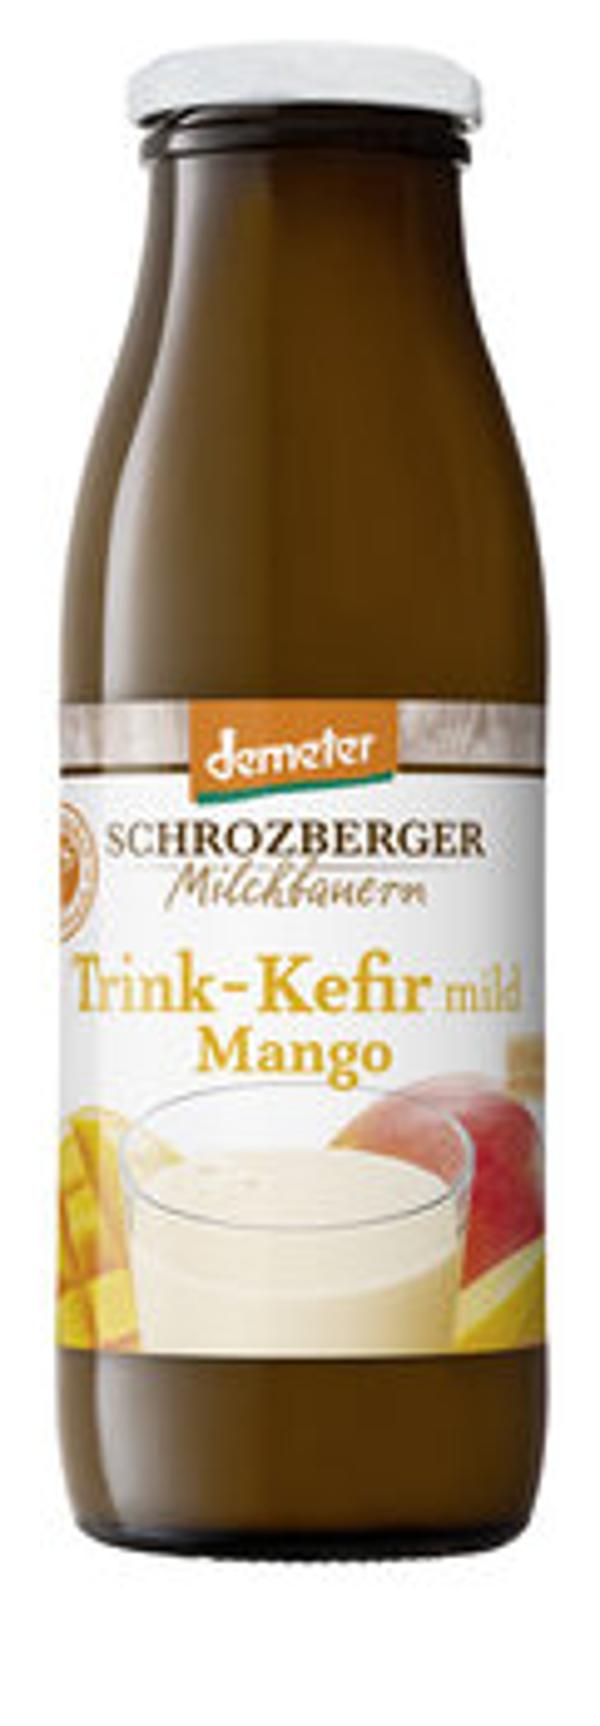 Produktfoto zu Trink Kefir Mango 1,5%